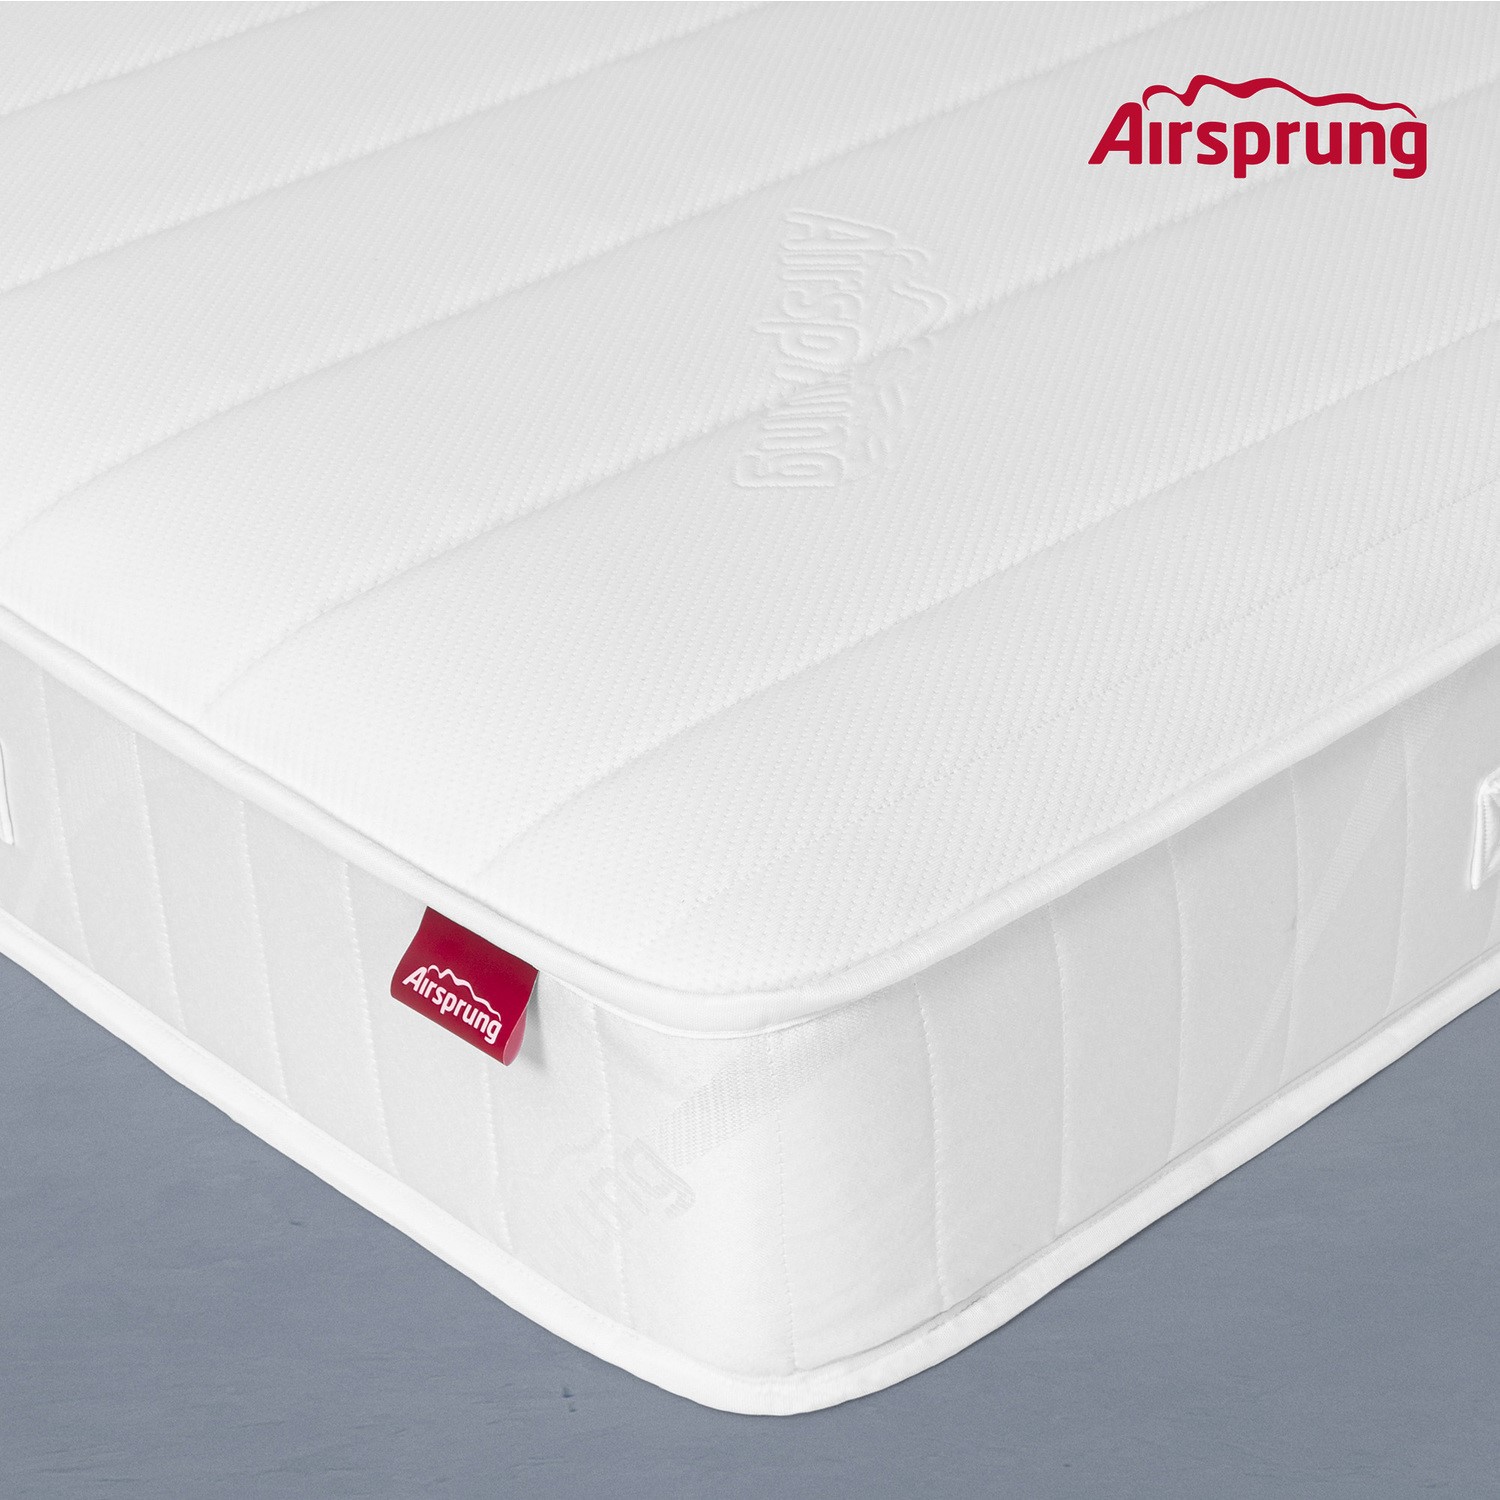 Airsprung hybrid rolled pocket sprung mattress - king size